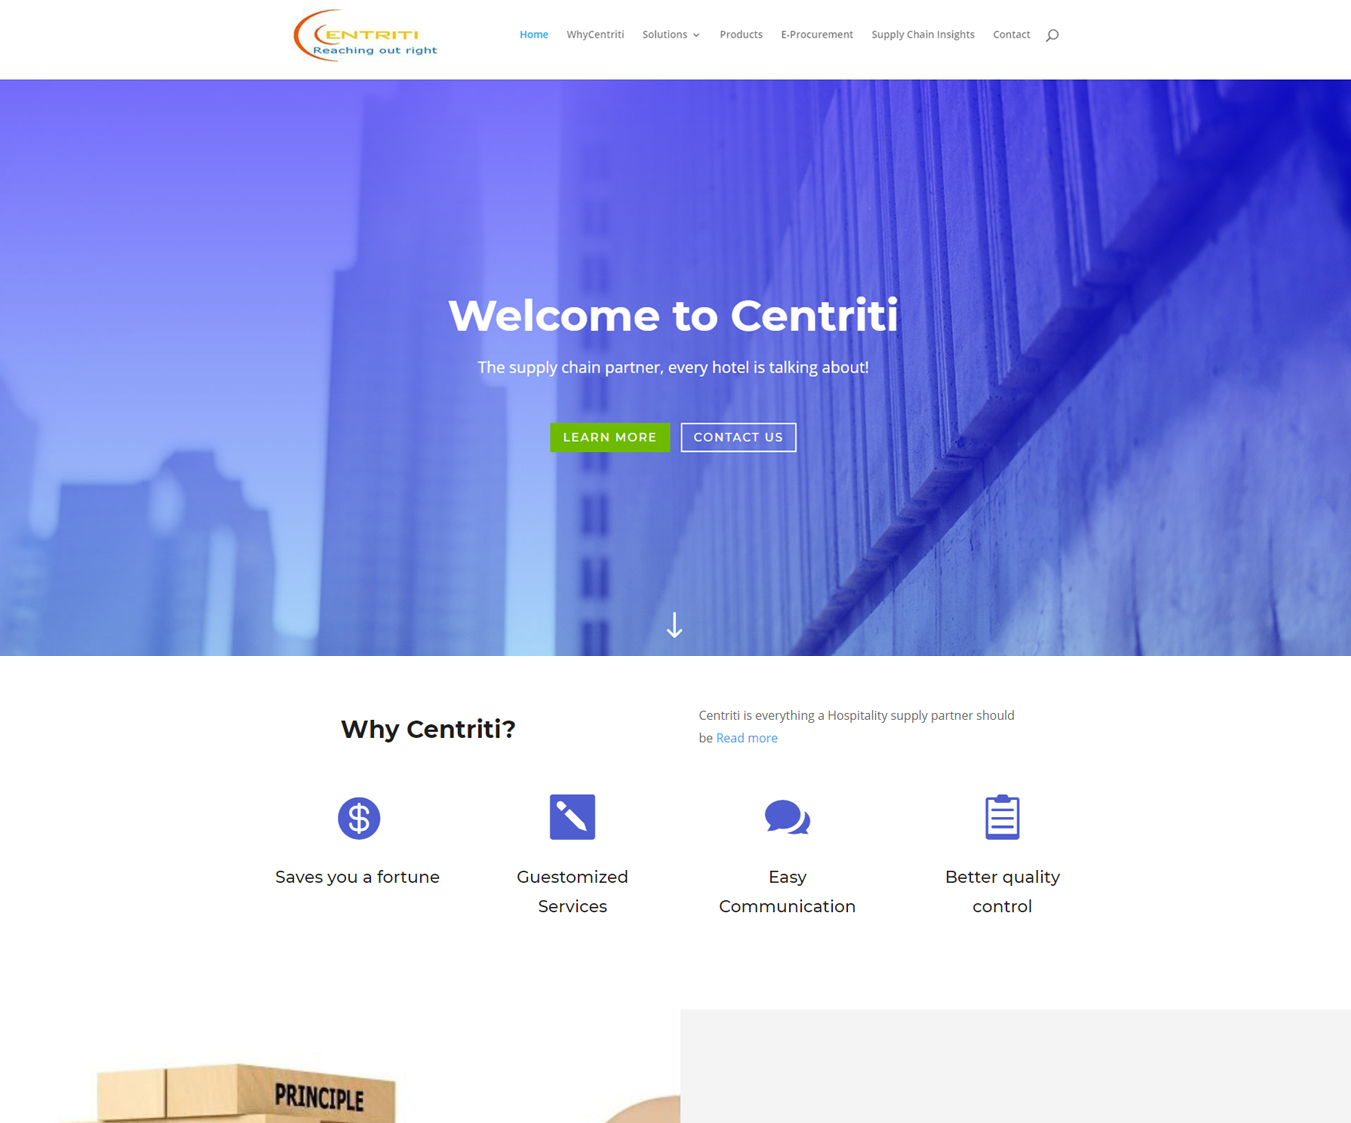 Centriti – The Supply Chain Partner